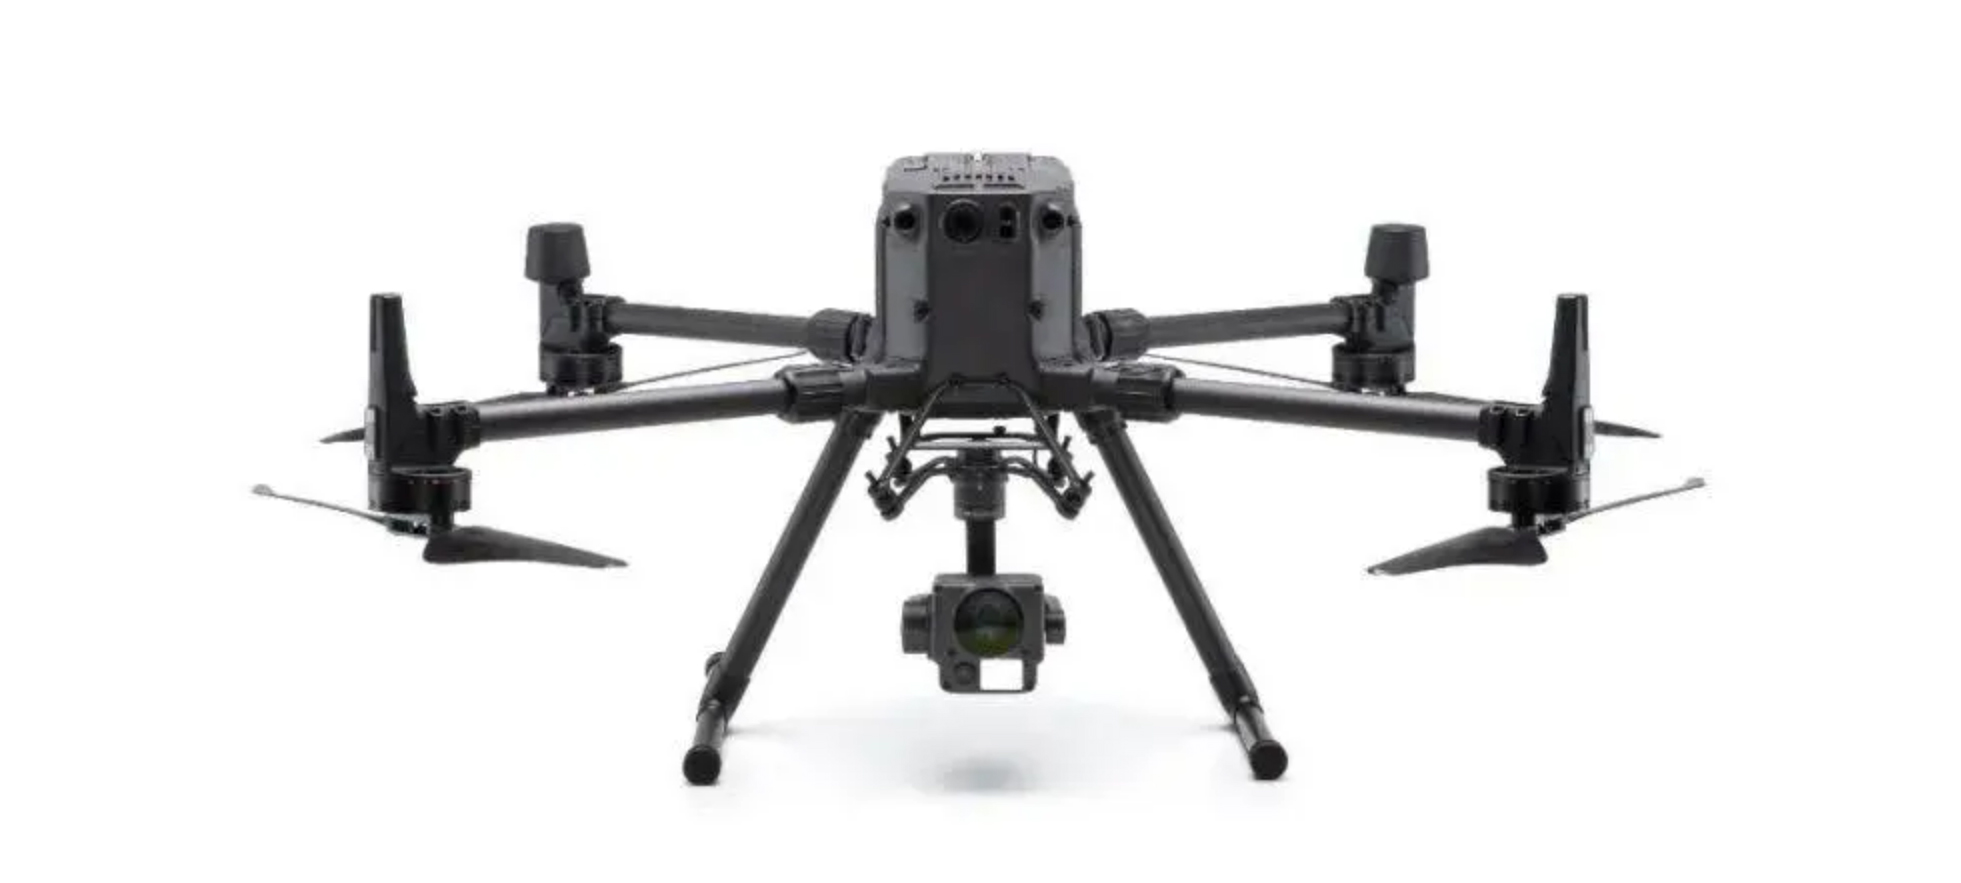 DJI M300 camera drone